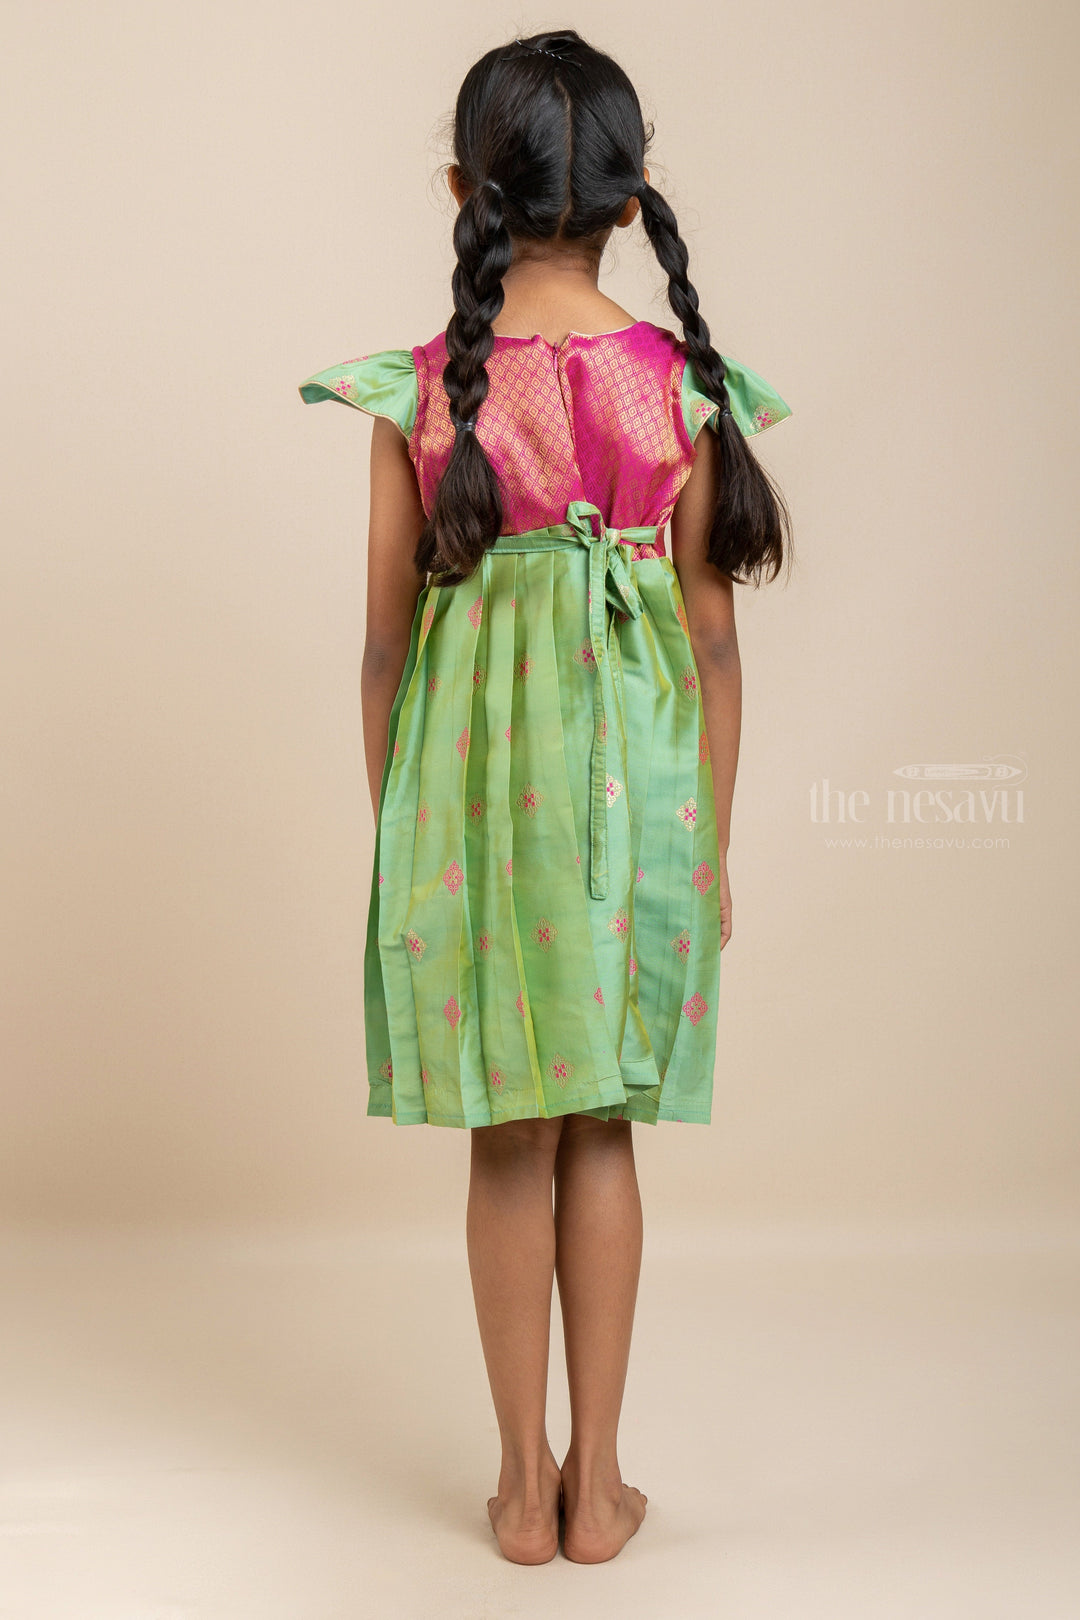 The Nesavu Silk Frock Mint Green With Pink Designer Silk Frock For New Born Baby Girls Nesavu Pink Yoke Dresses Online | Silk Ethnics Pleat Design Ideas | The Nesavu